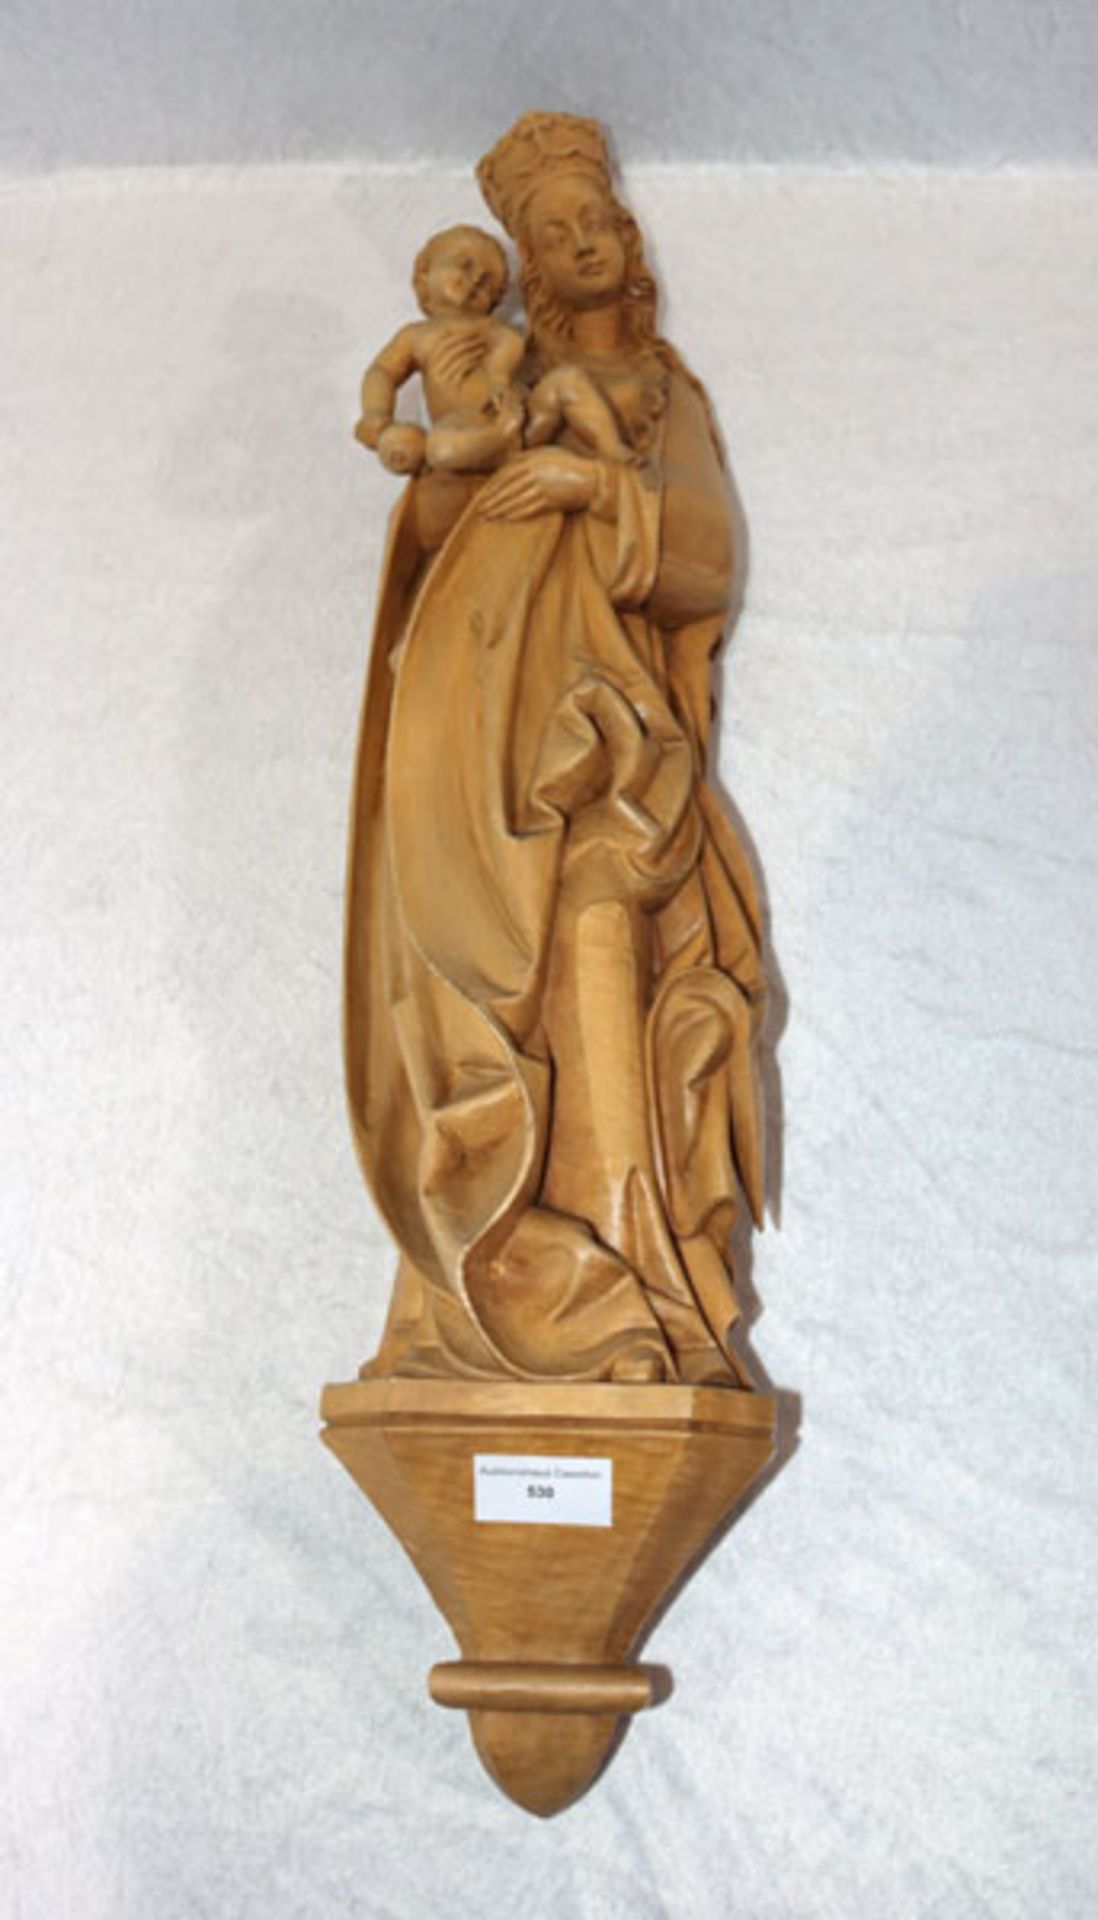 Holz Figurenskulptur 'Maria mit Kind' auf Sockel, gebeizt, H 62 cm, B 14 cm, T 10 cm